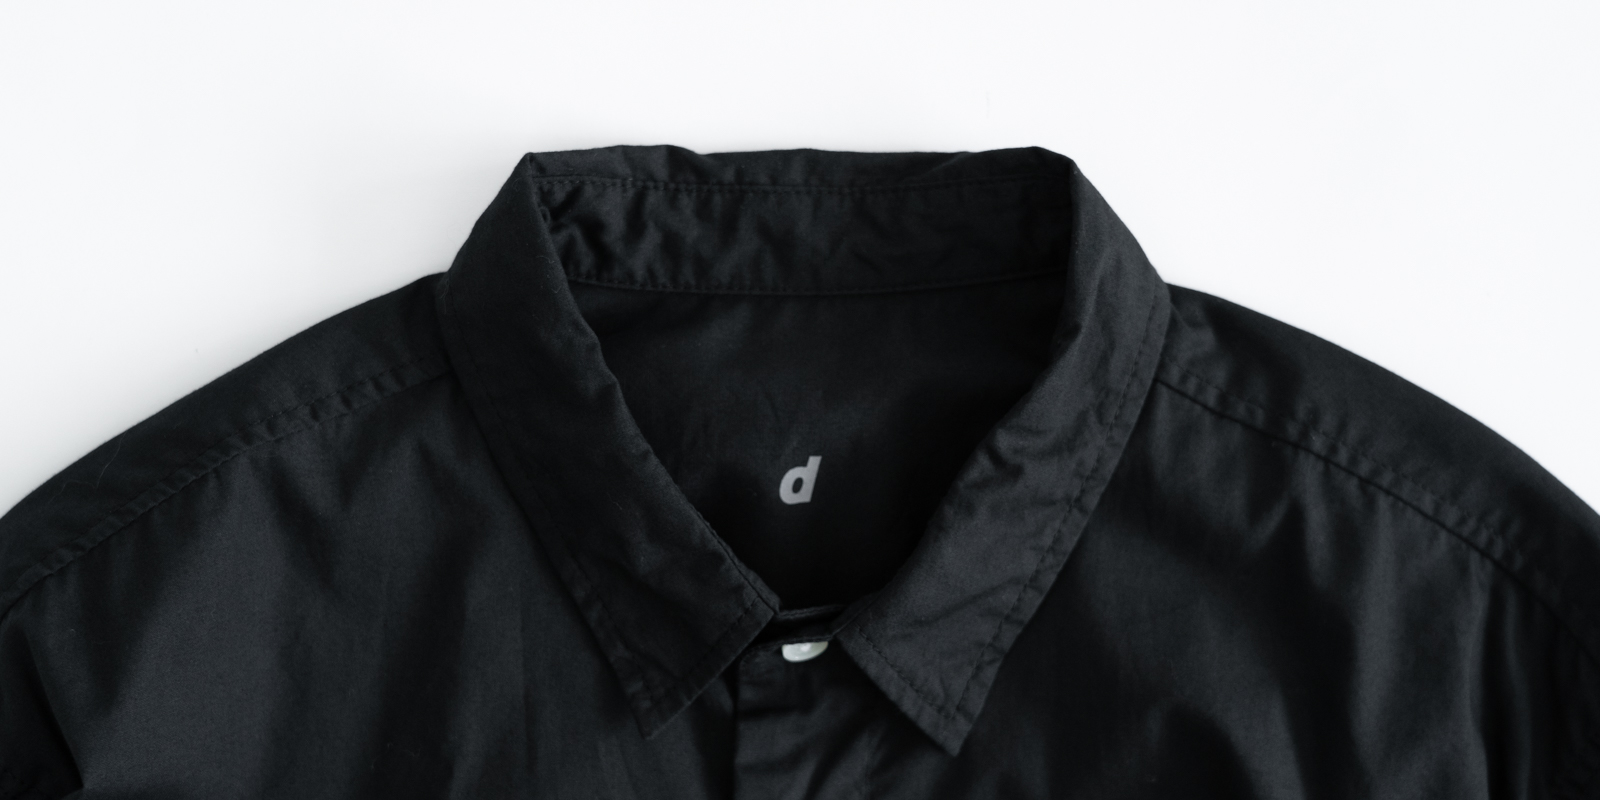 d WEAR レギュラーシャツ・ブラック・XL